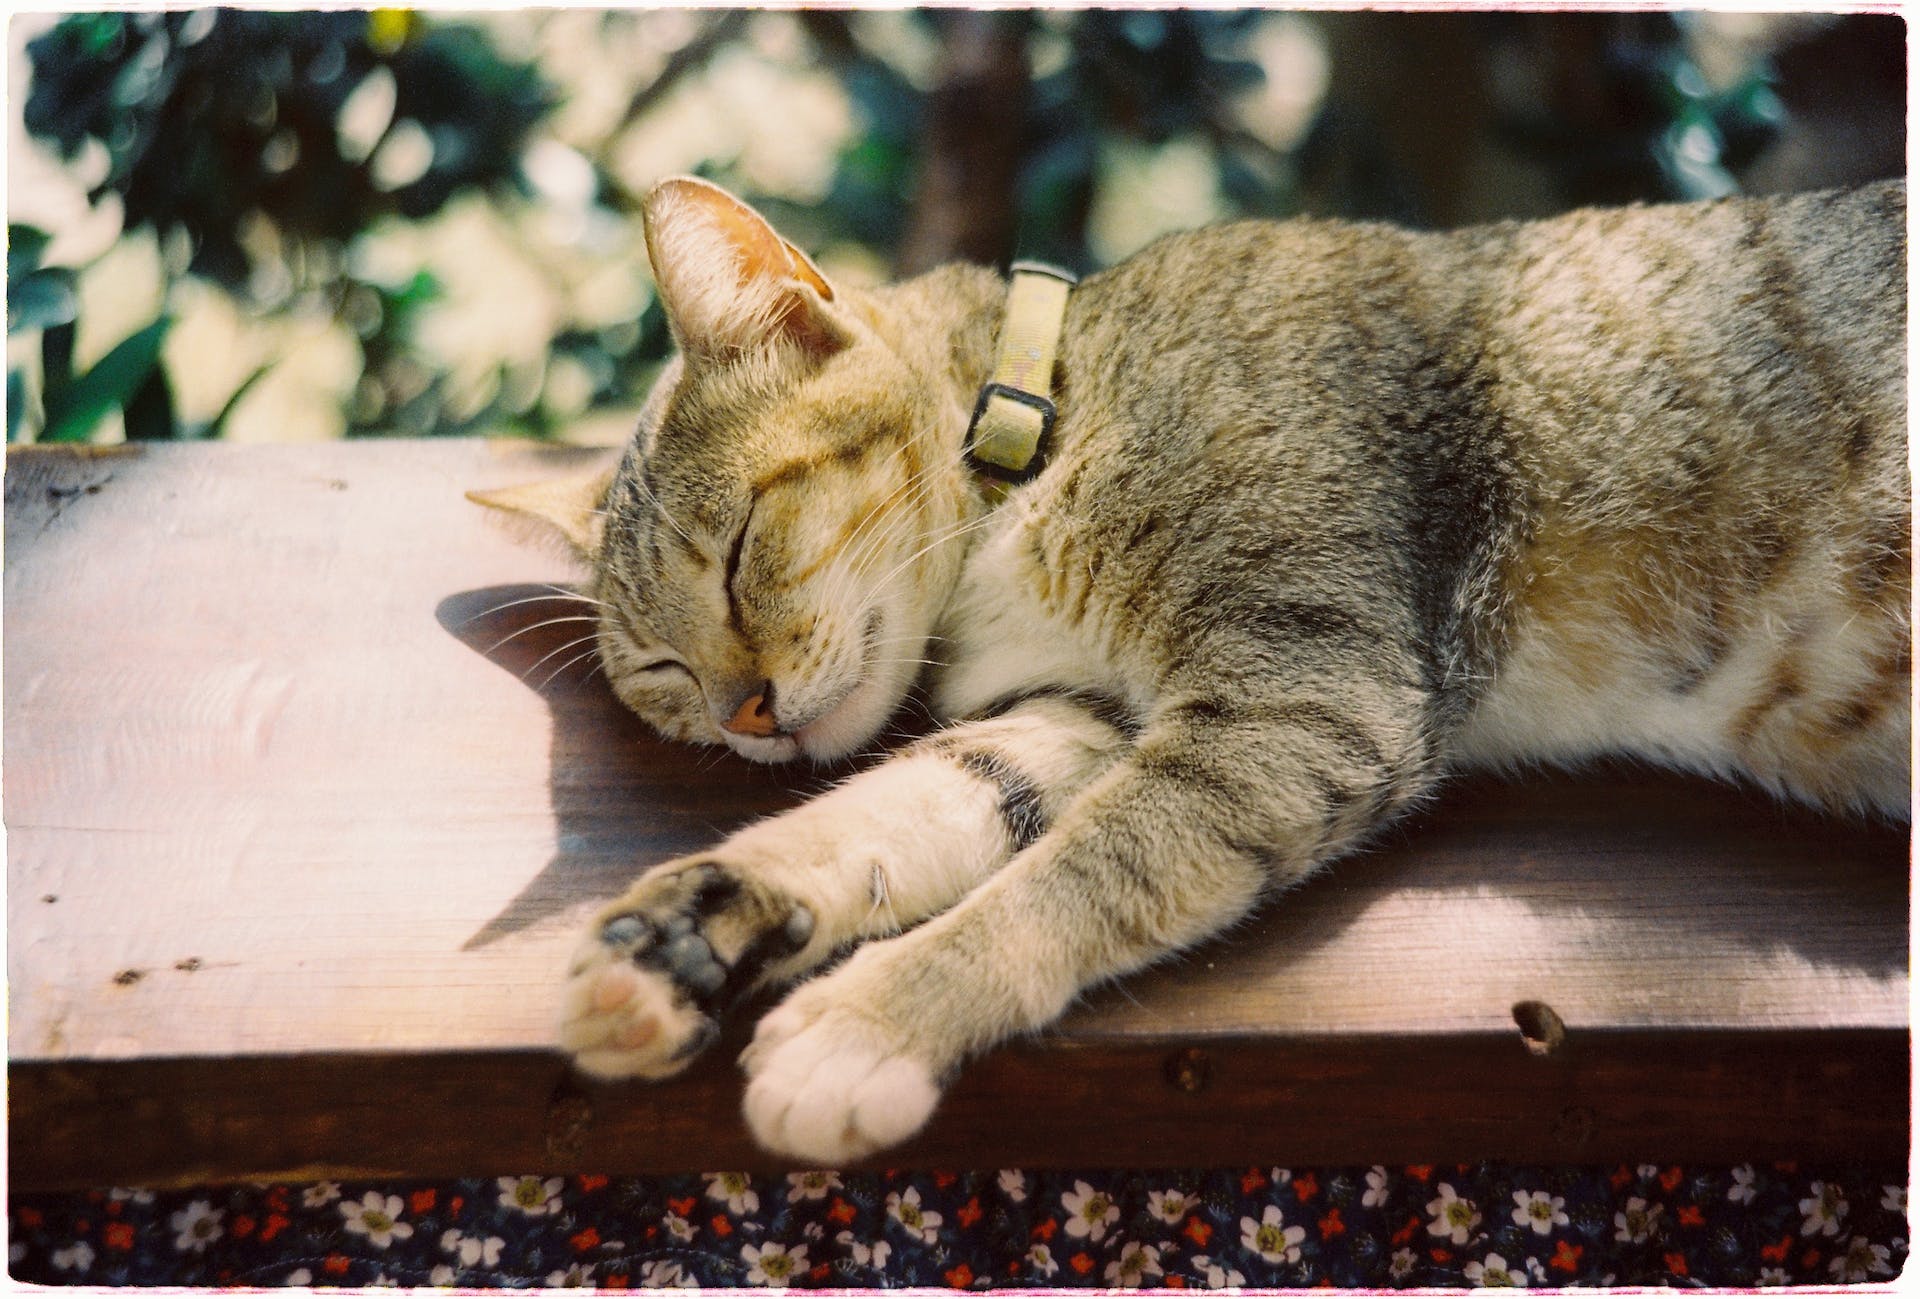 A cat wearing a collar lying in a balcony